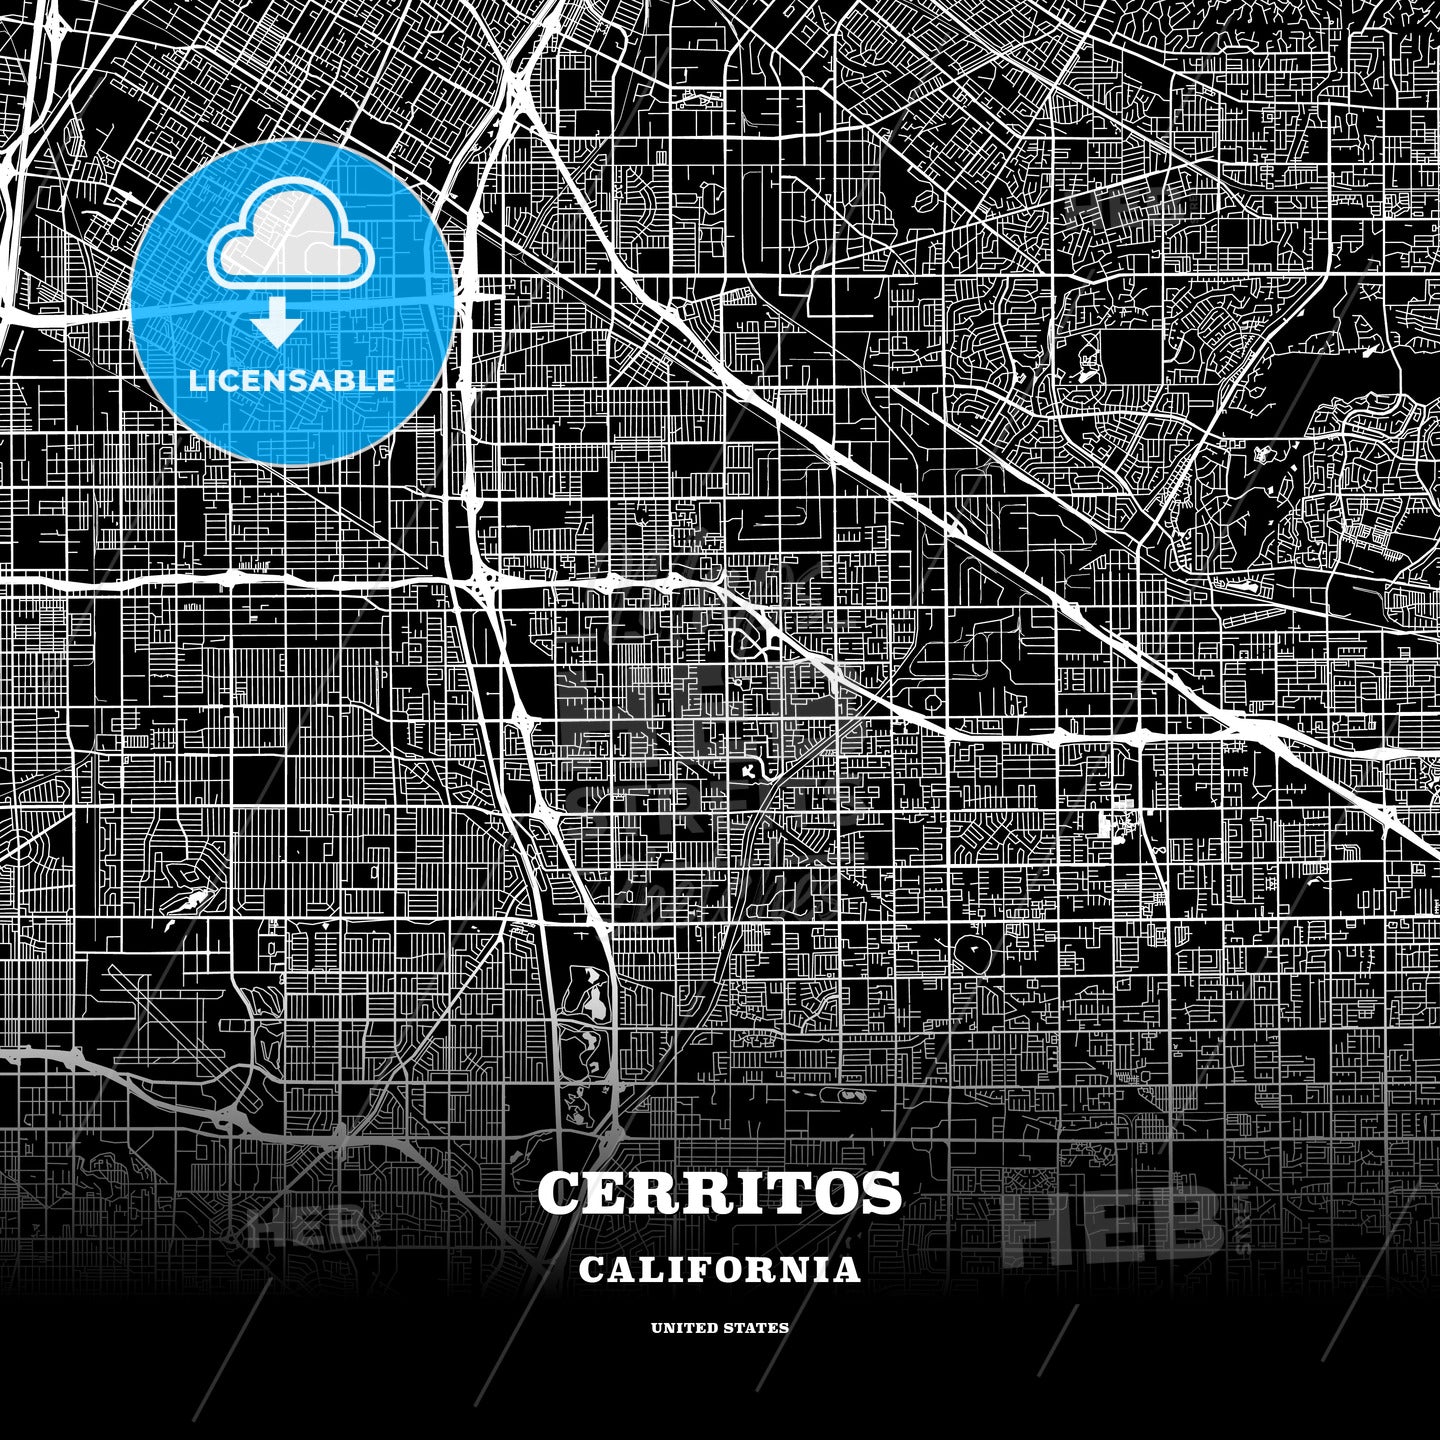 Cerritos, California, USA map